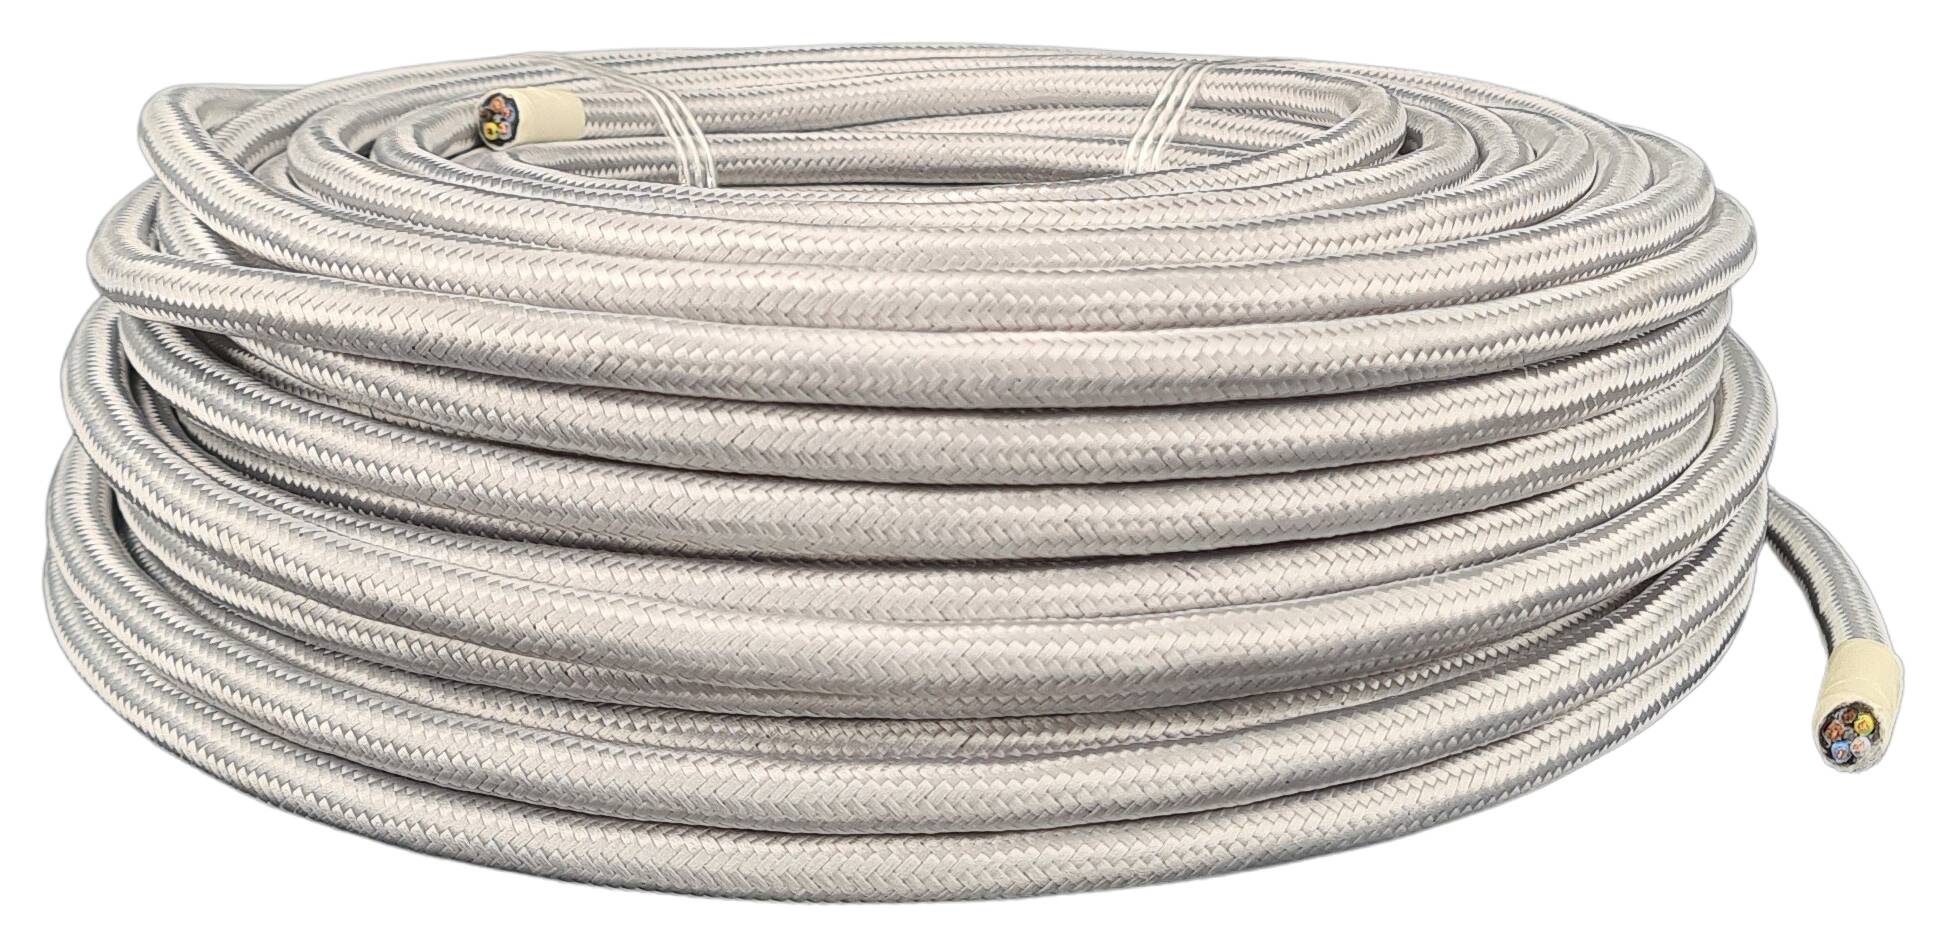 Kabel m. Stahlseil 5G 0,75 HO5VV-F PVC  textilummantelt RAL 7044 silber glänzend